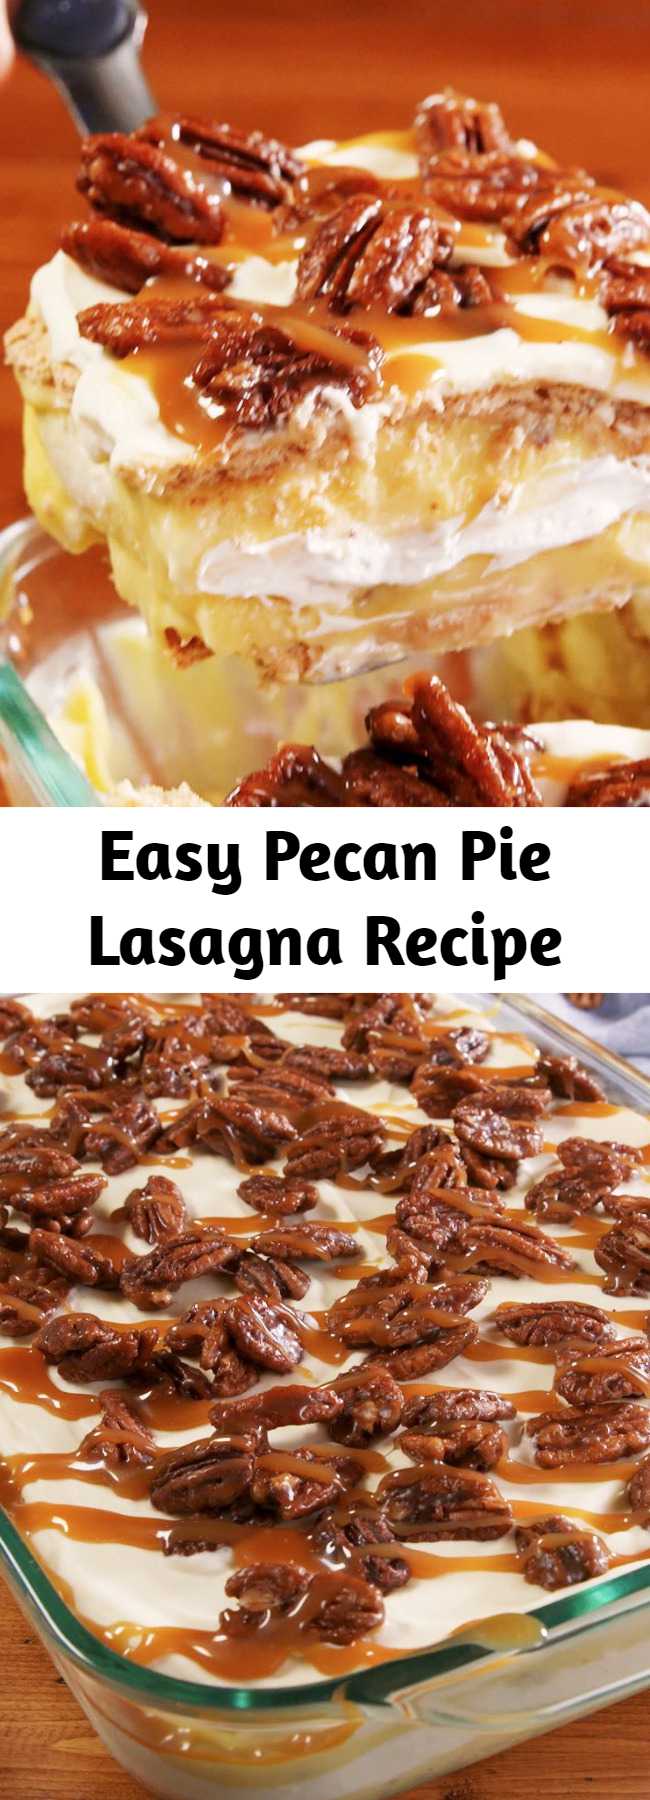 Easy Pecan Pie Lasagna Recipe - This Pecan Pie Lasagna is the ultimate layered fall dessert. #easy #recipe #pecanpie #lasagna #falldessert #fallrecipe #dessert #pie #pecan #thanksgiving #pudding